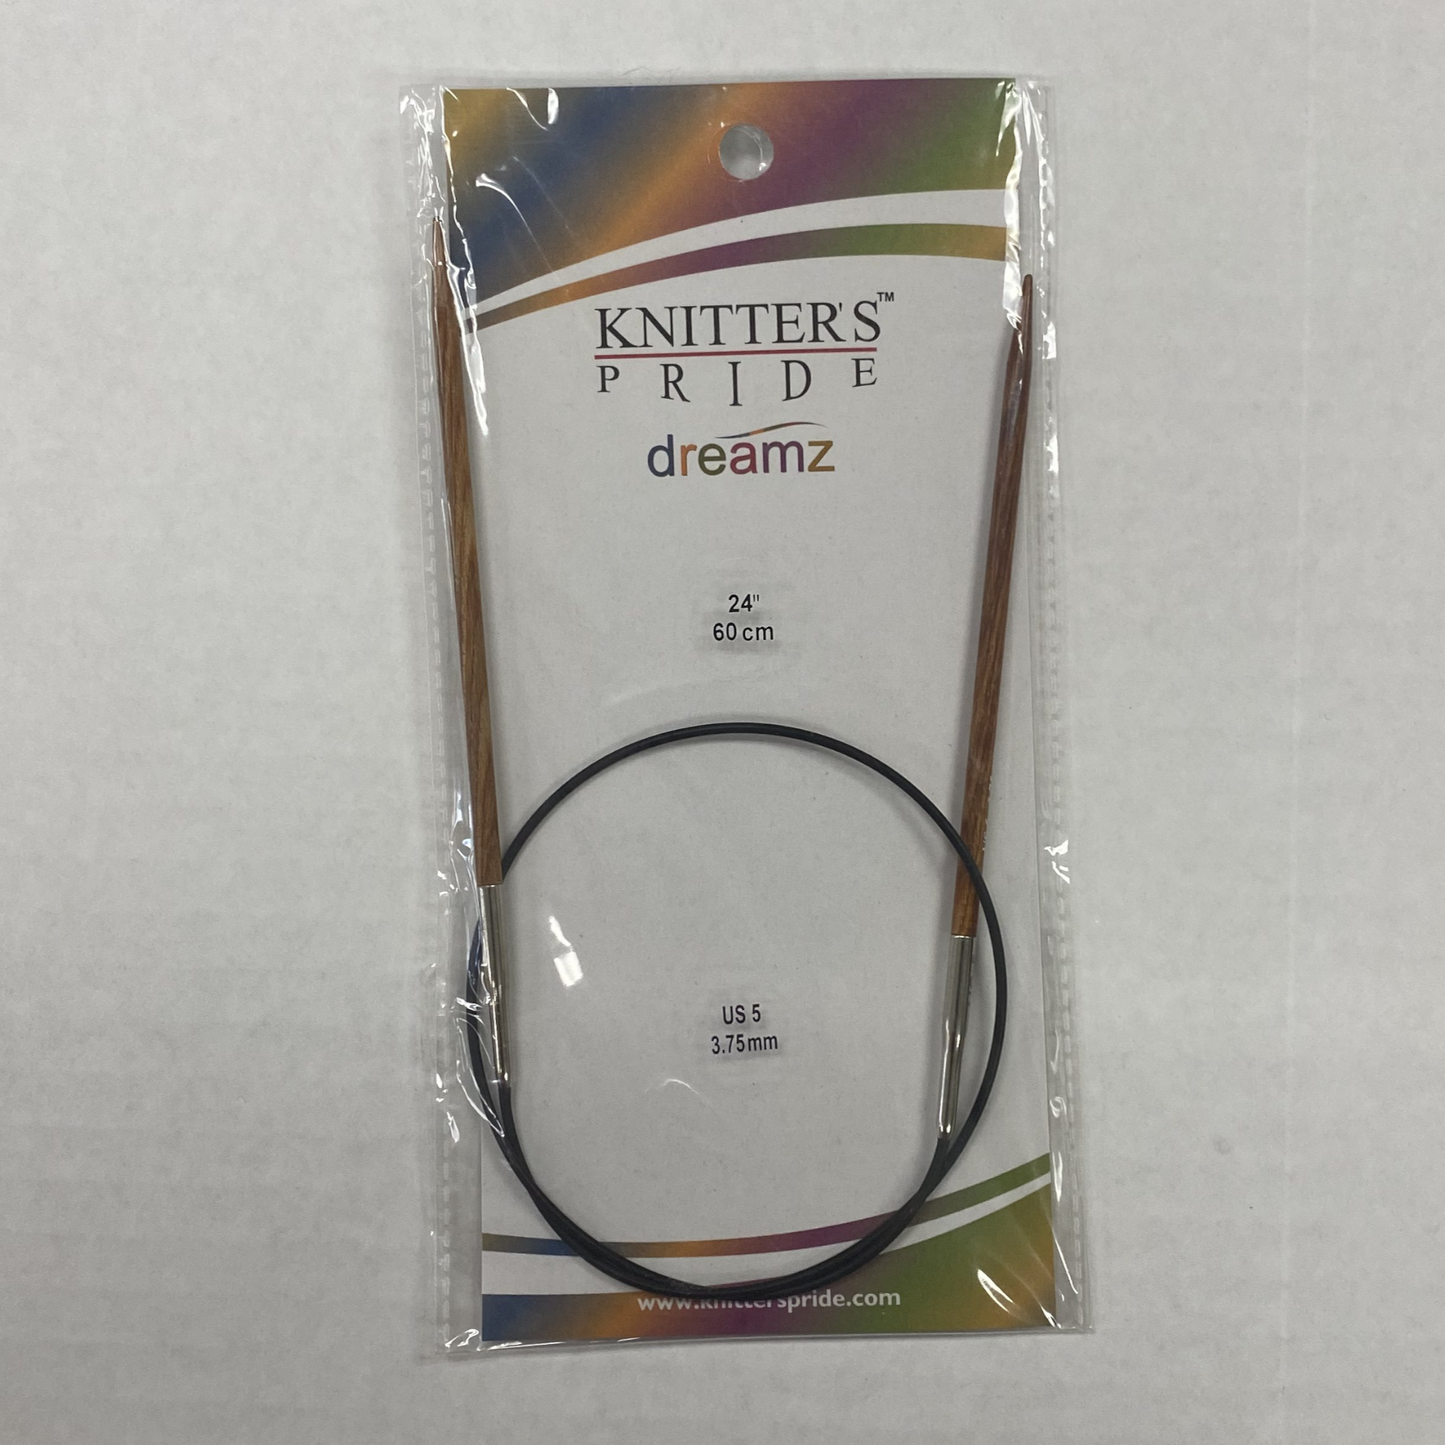 Knitter's Pride - Dreamz - US 5 / 3.75mm Fixed Circular Needles